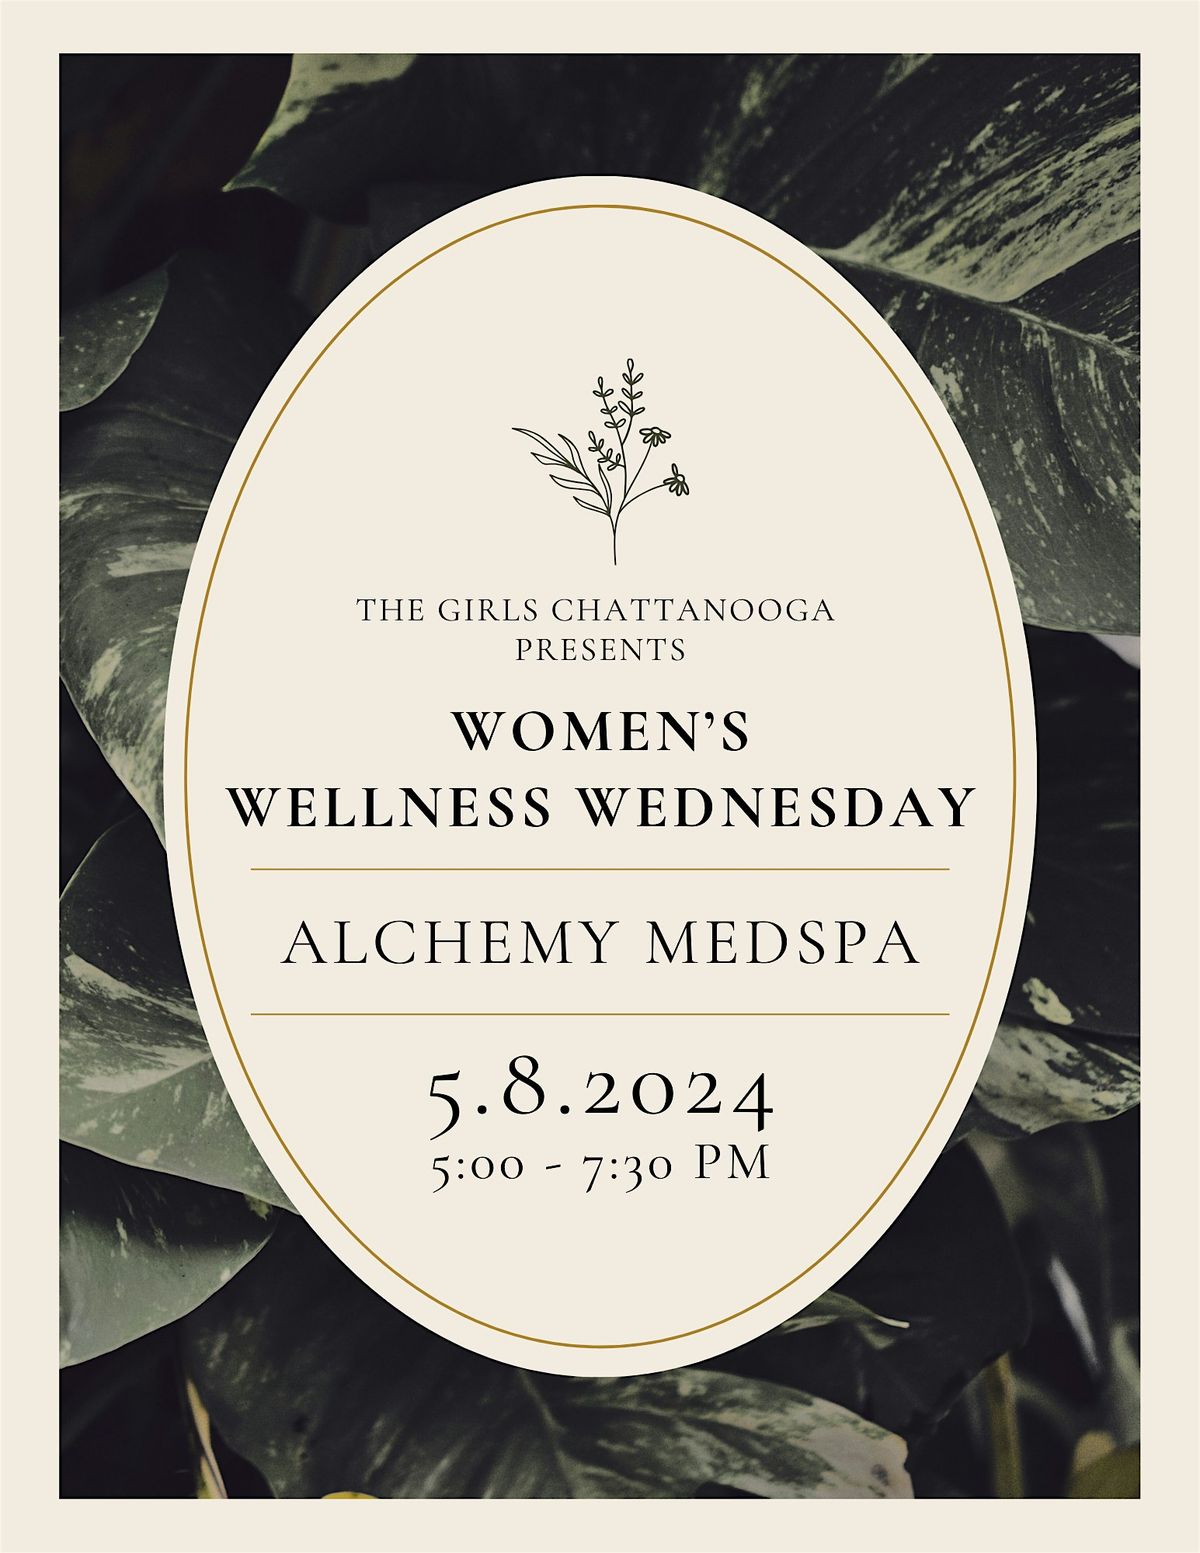 Women's Wellness Wednesday